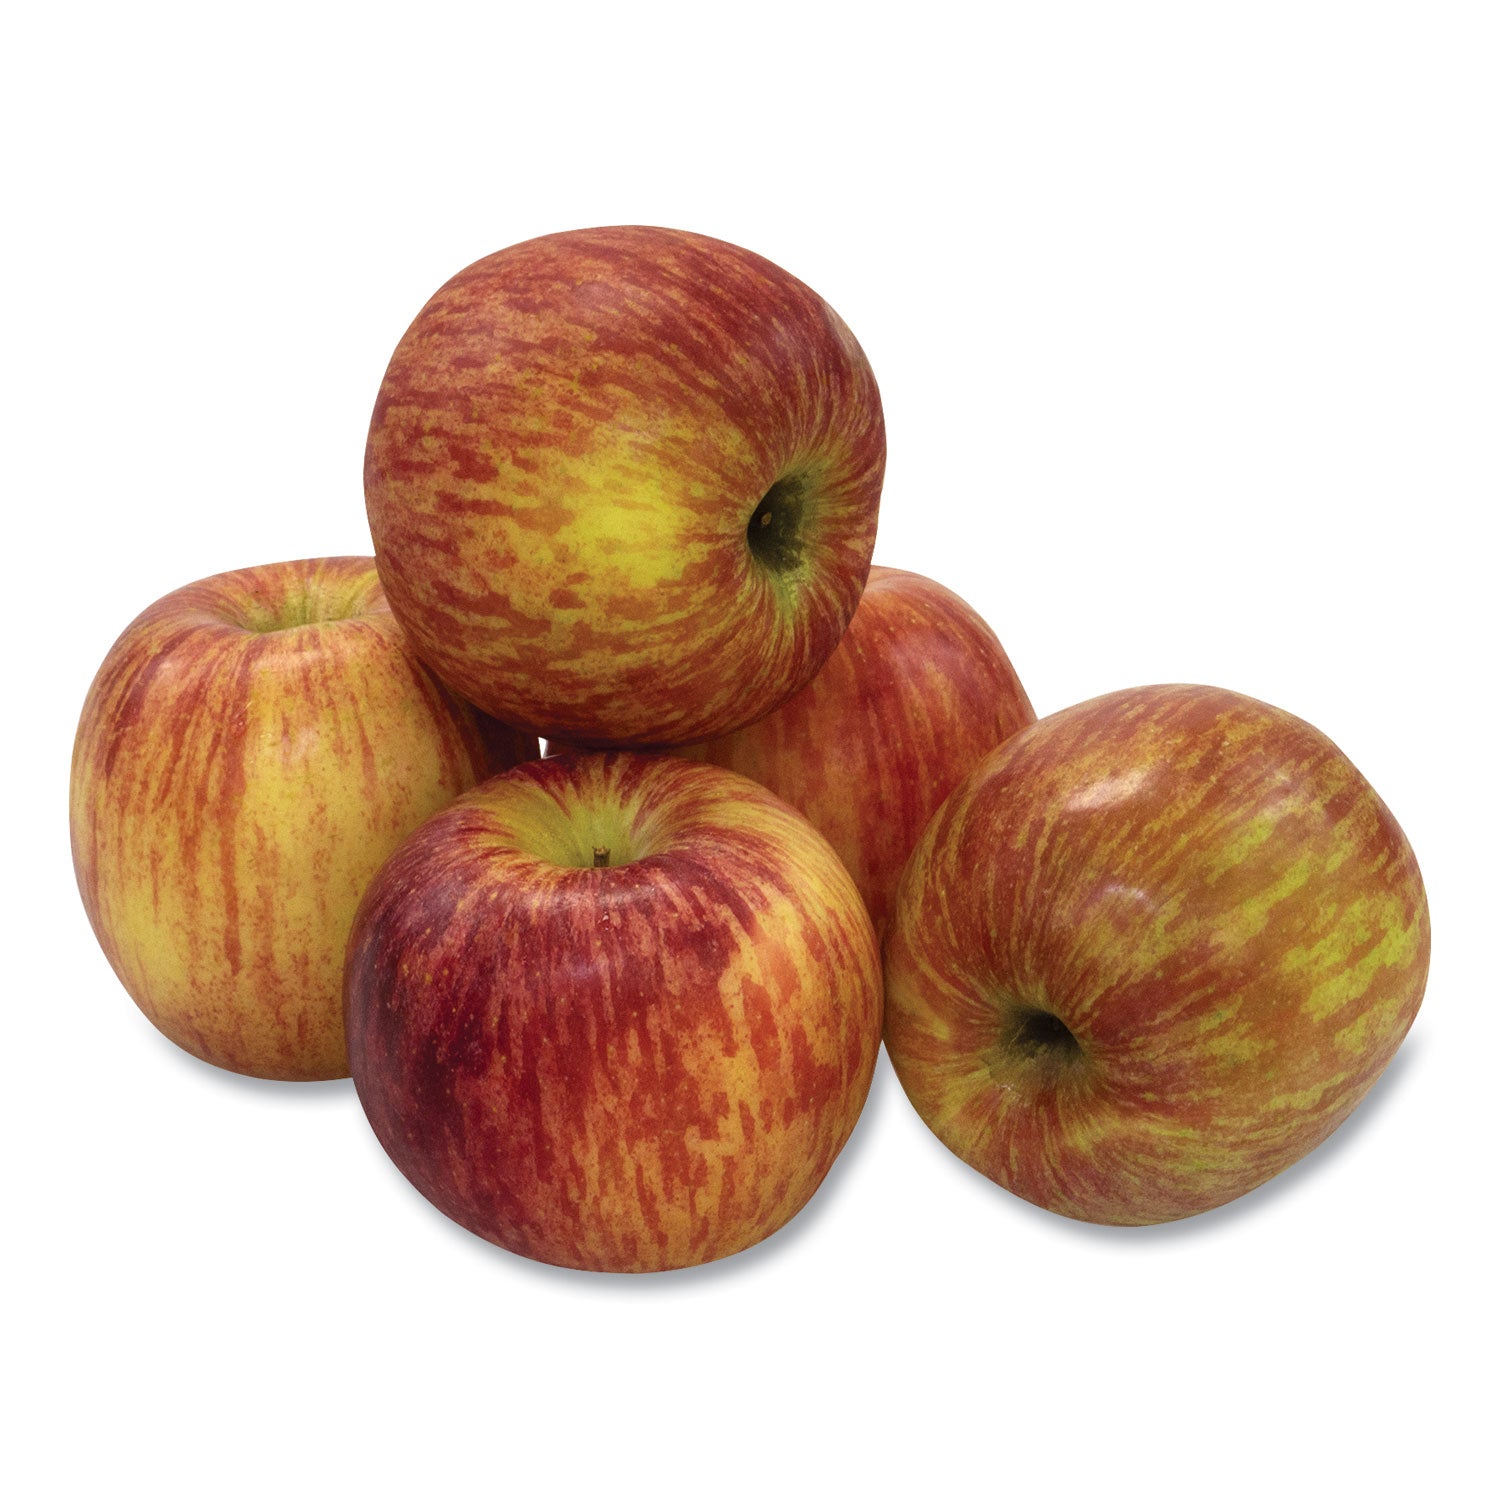 fresh-fuji-apples-8-carton-ships-in-1-3-business-days_grr90000040 - 1